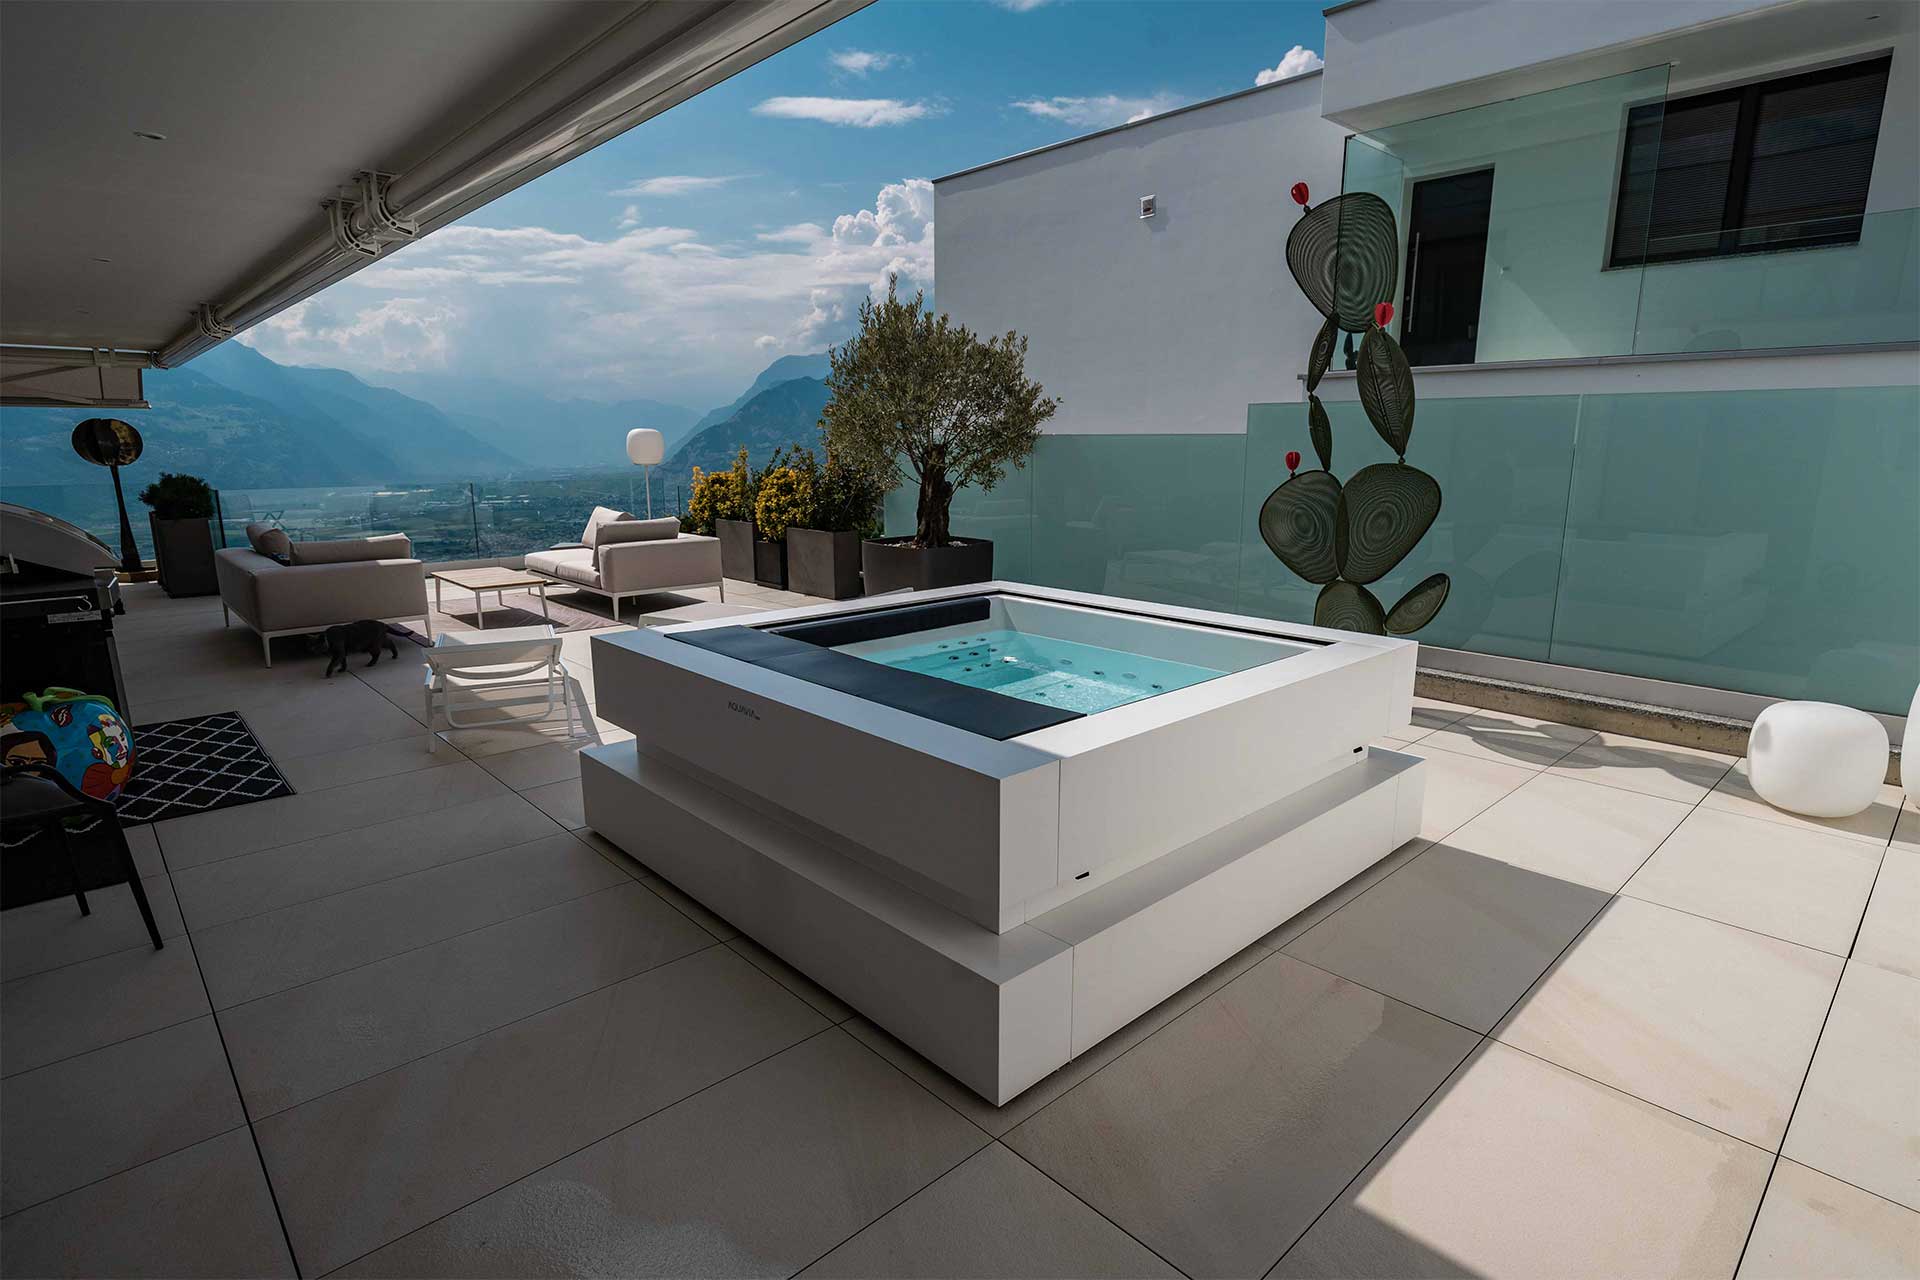 Aquavia rigid outdoor hot tub in an idyllic setting